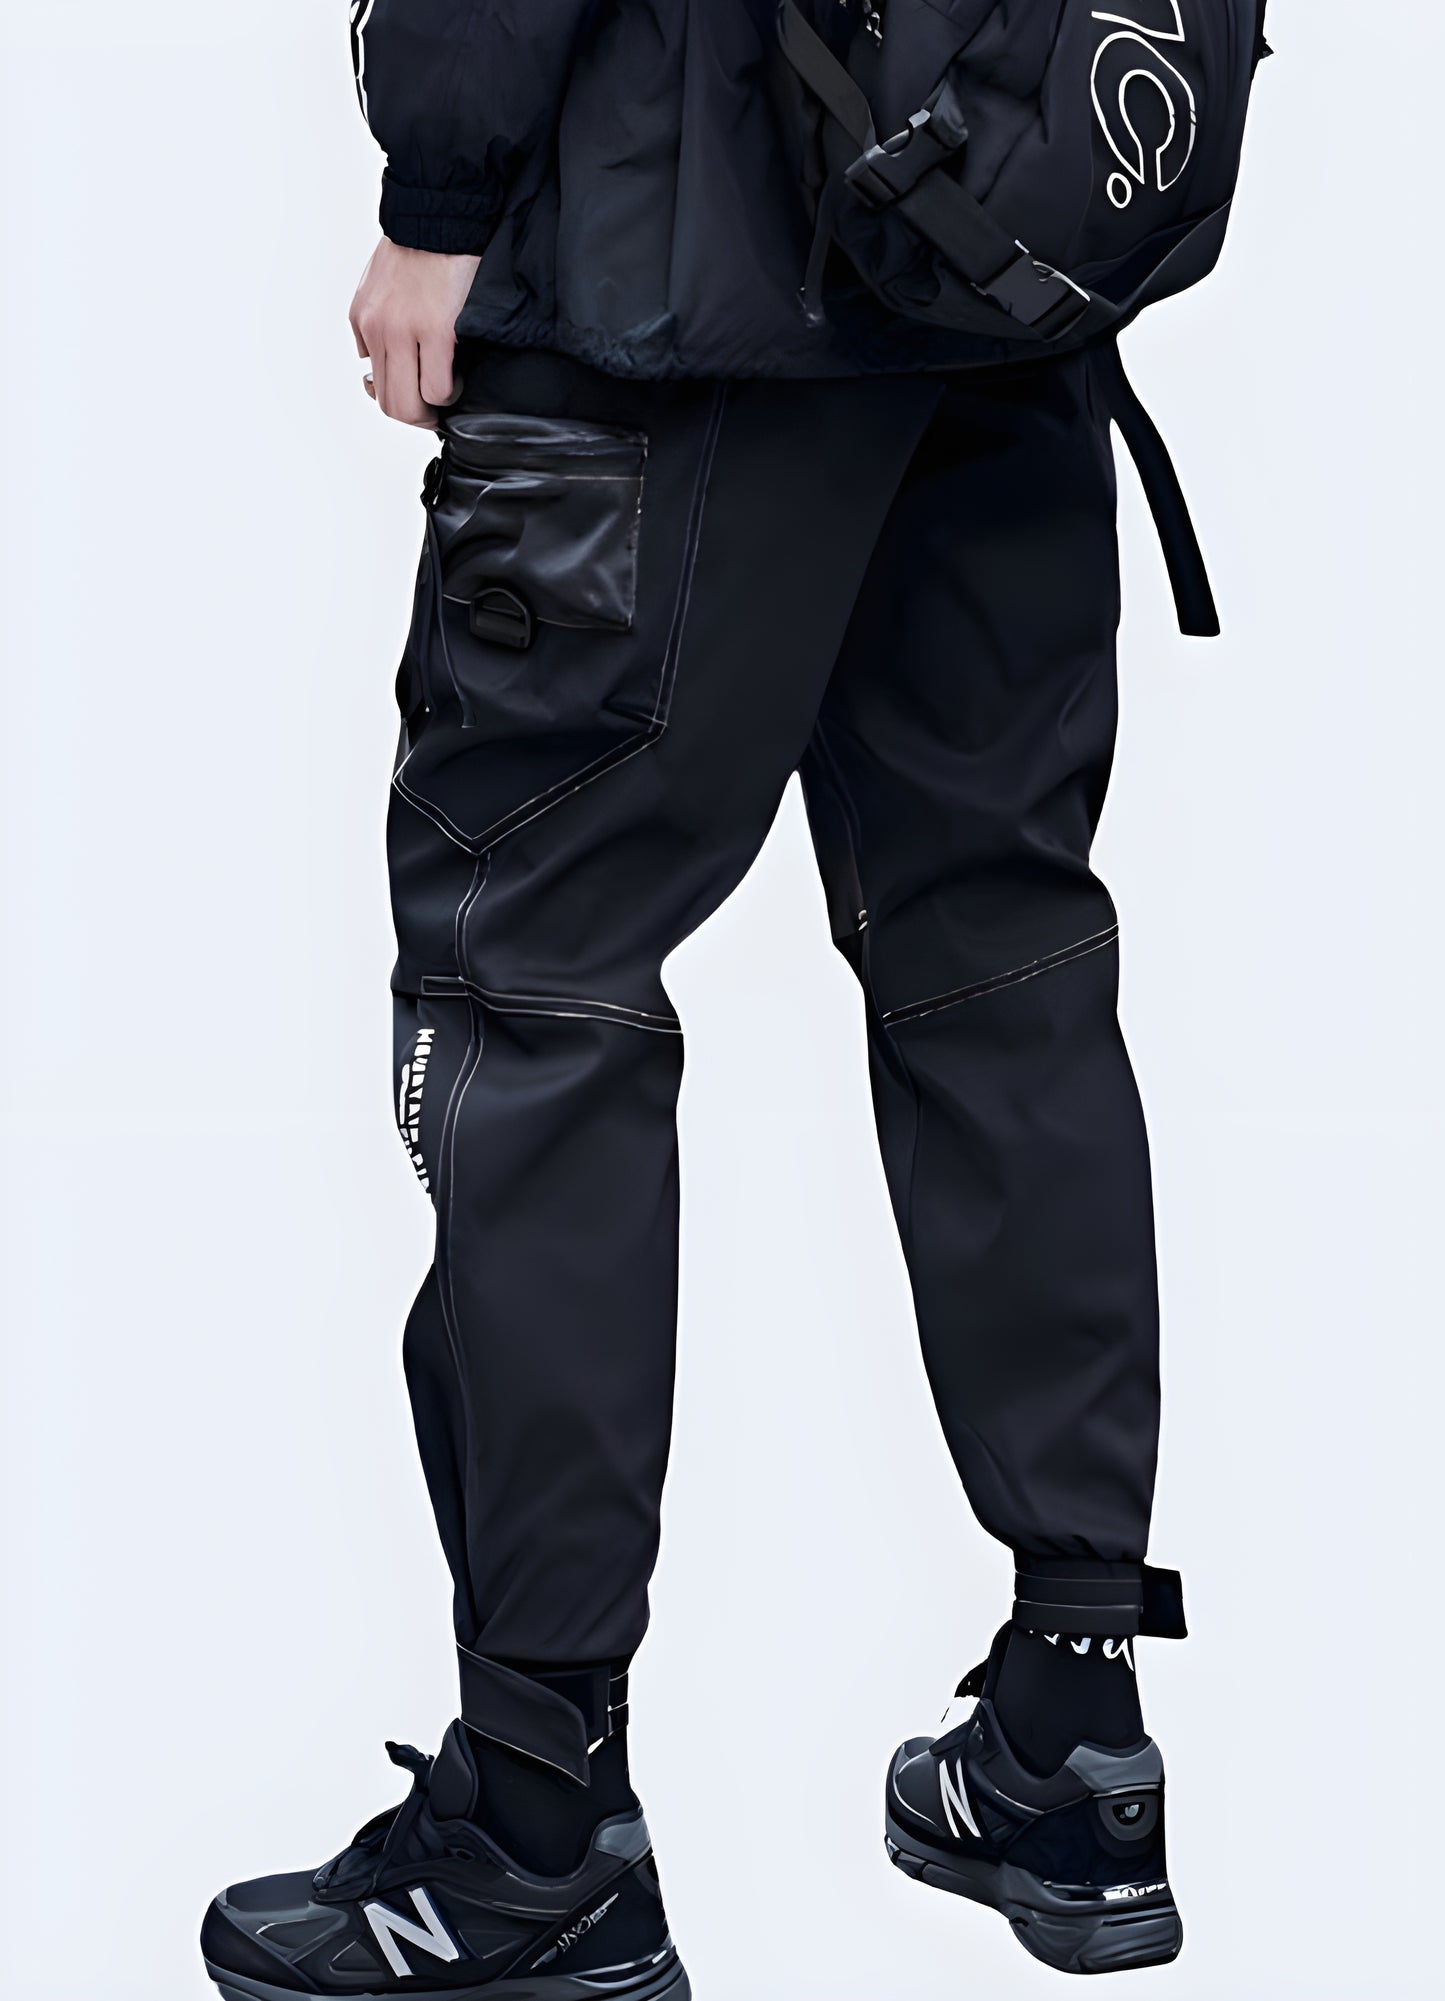 Stretchy, techwear aesthetic, modern design slim-fitting black cargo pants.